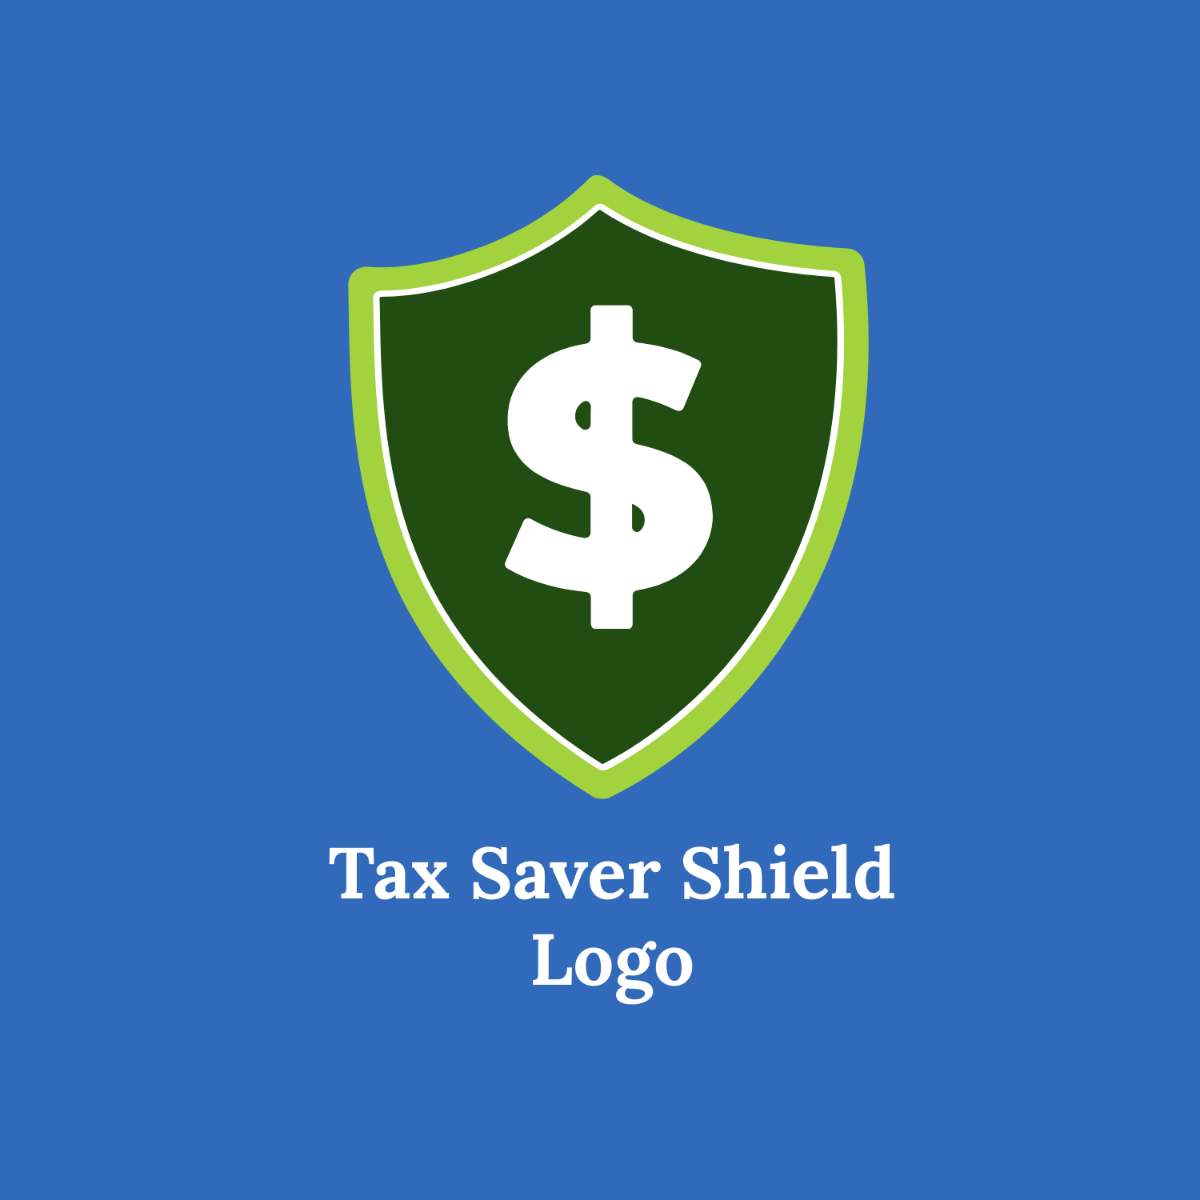 Tax Saver Shield Logo Template